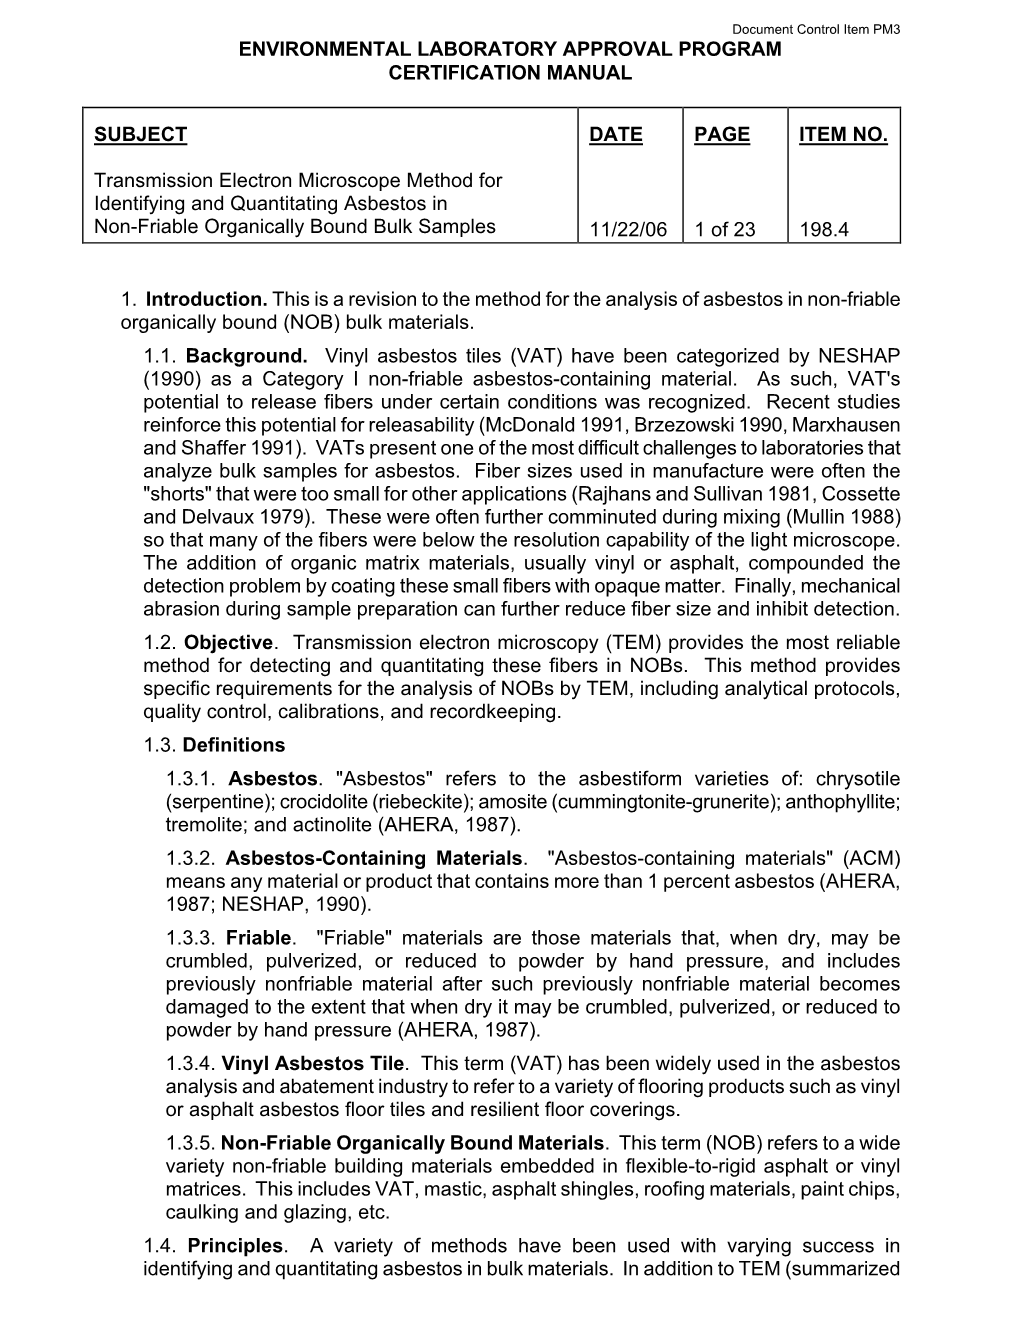 Environmental Laboratory Approval Program Certification Manual